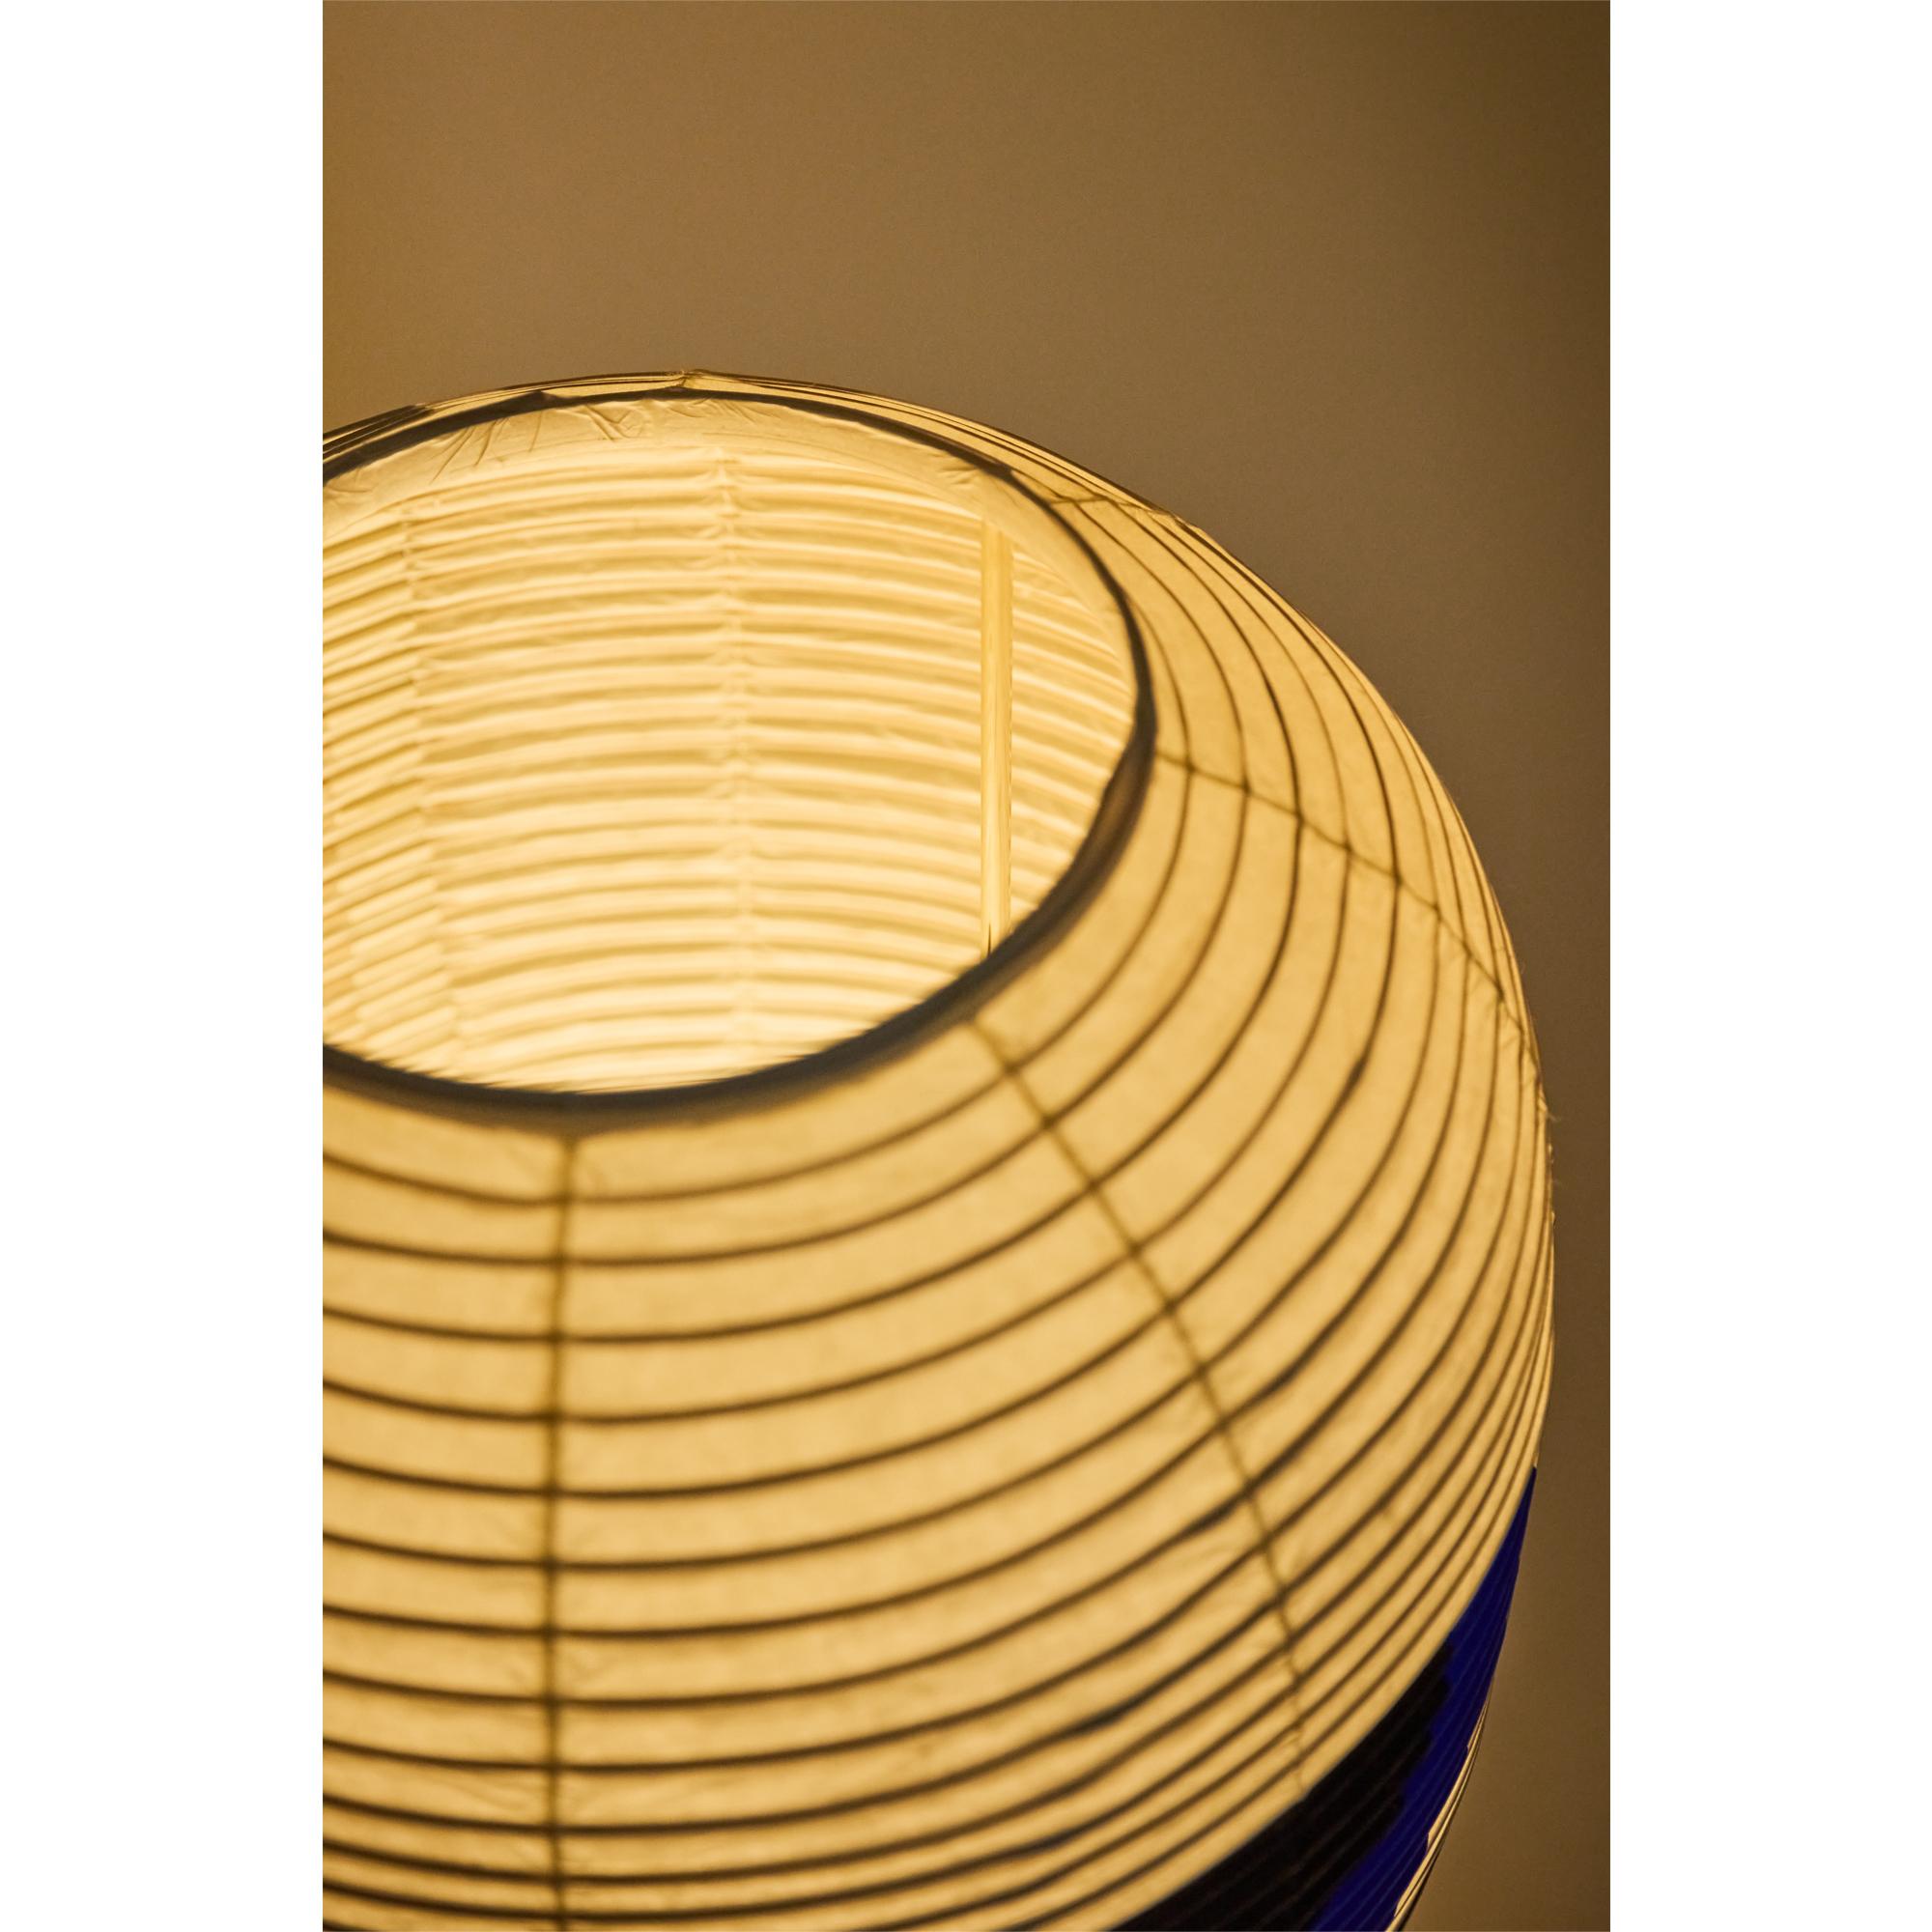 Edo Contemporary Japanese Chochin Floor Lamp Limited Edition #2 Zen Washi For Sale